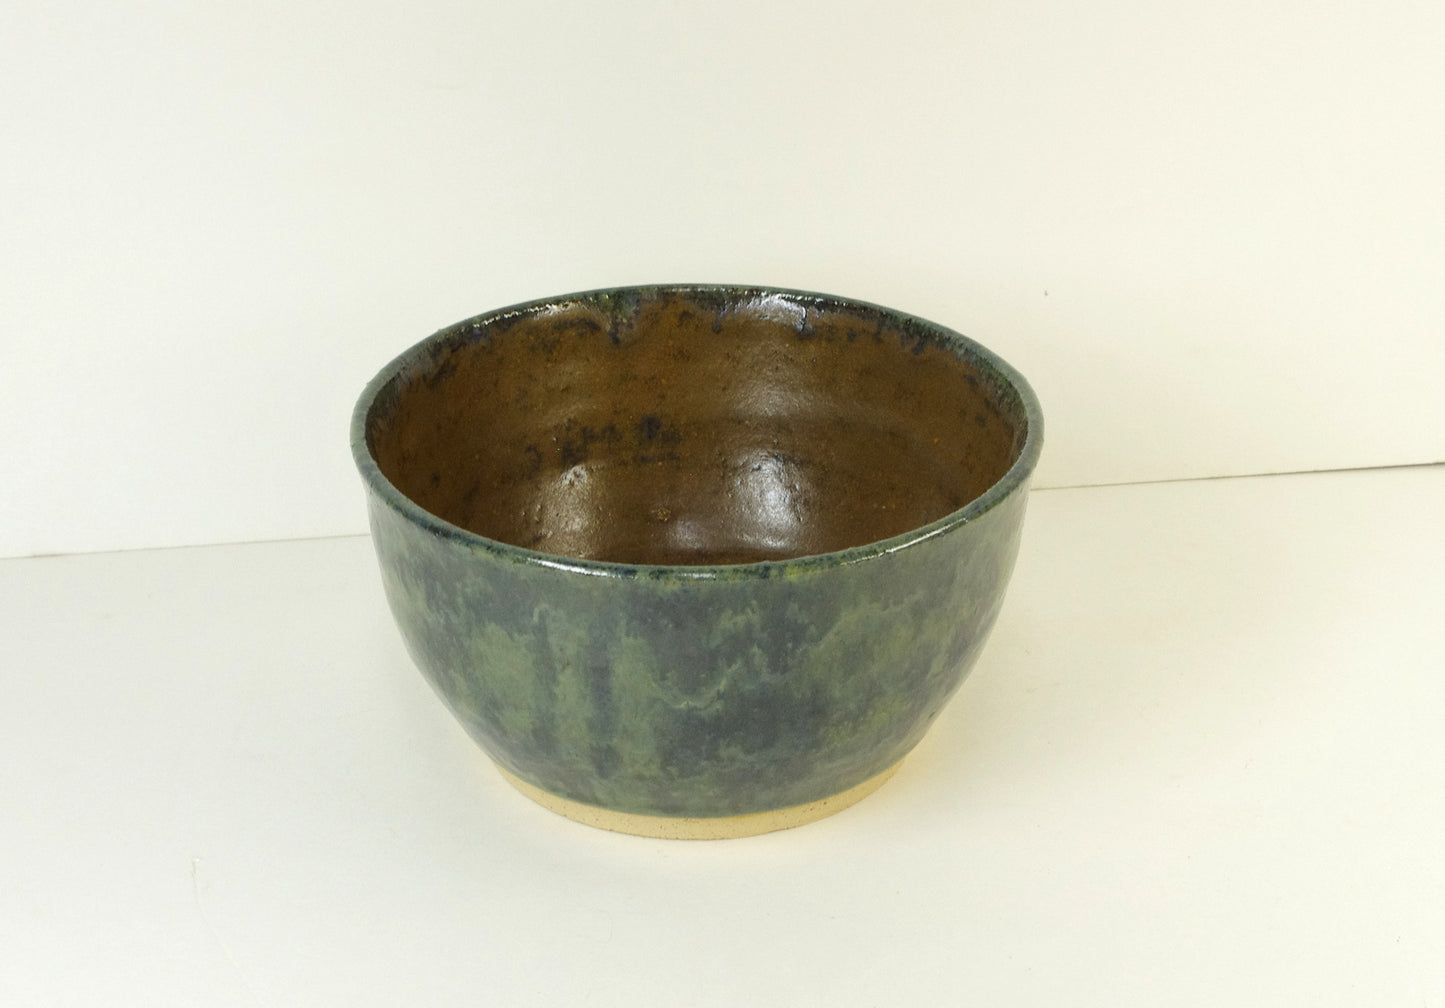 2115, Trinket Bowl Small, 4 3/4 x 2 1/2, Greens, Browns